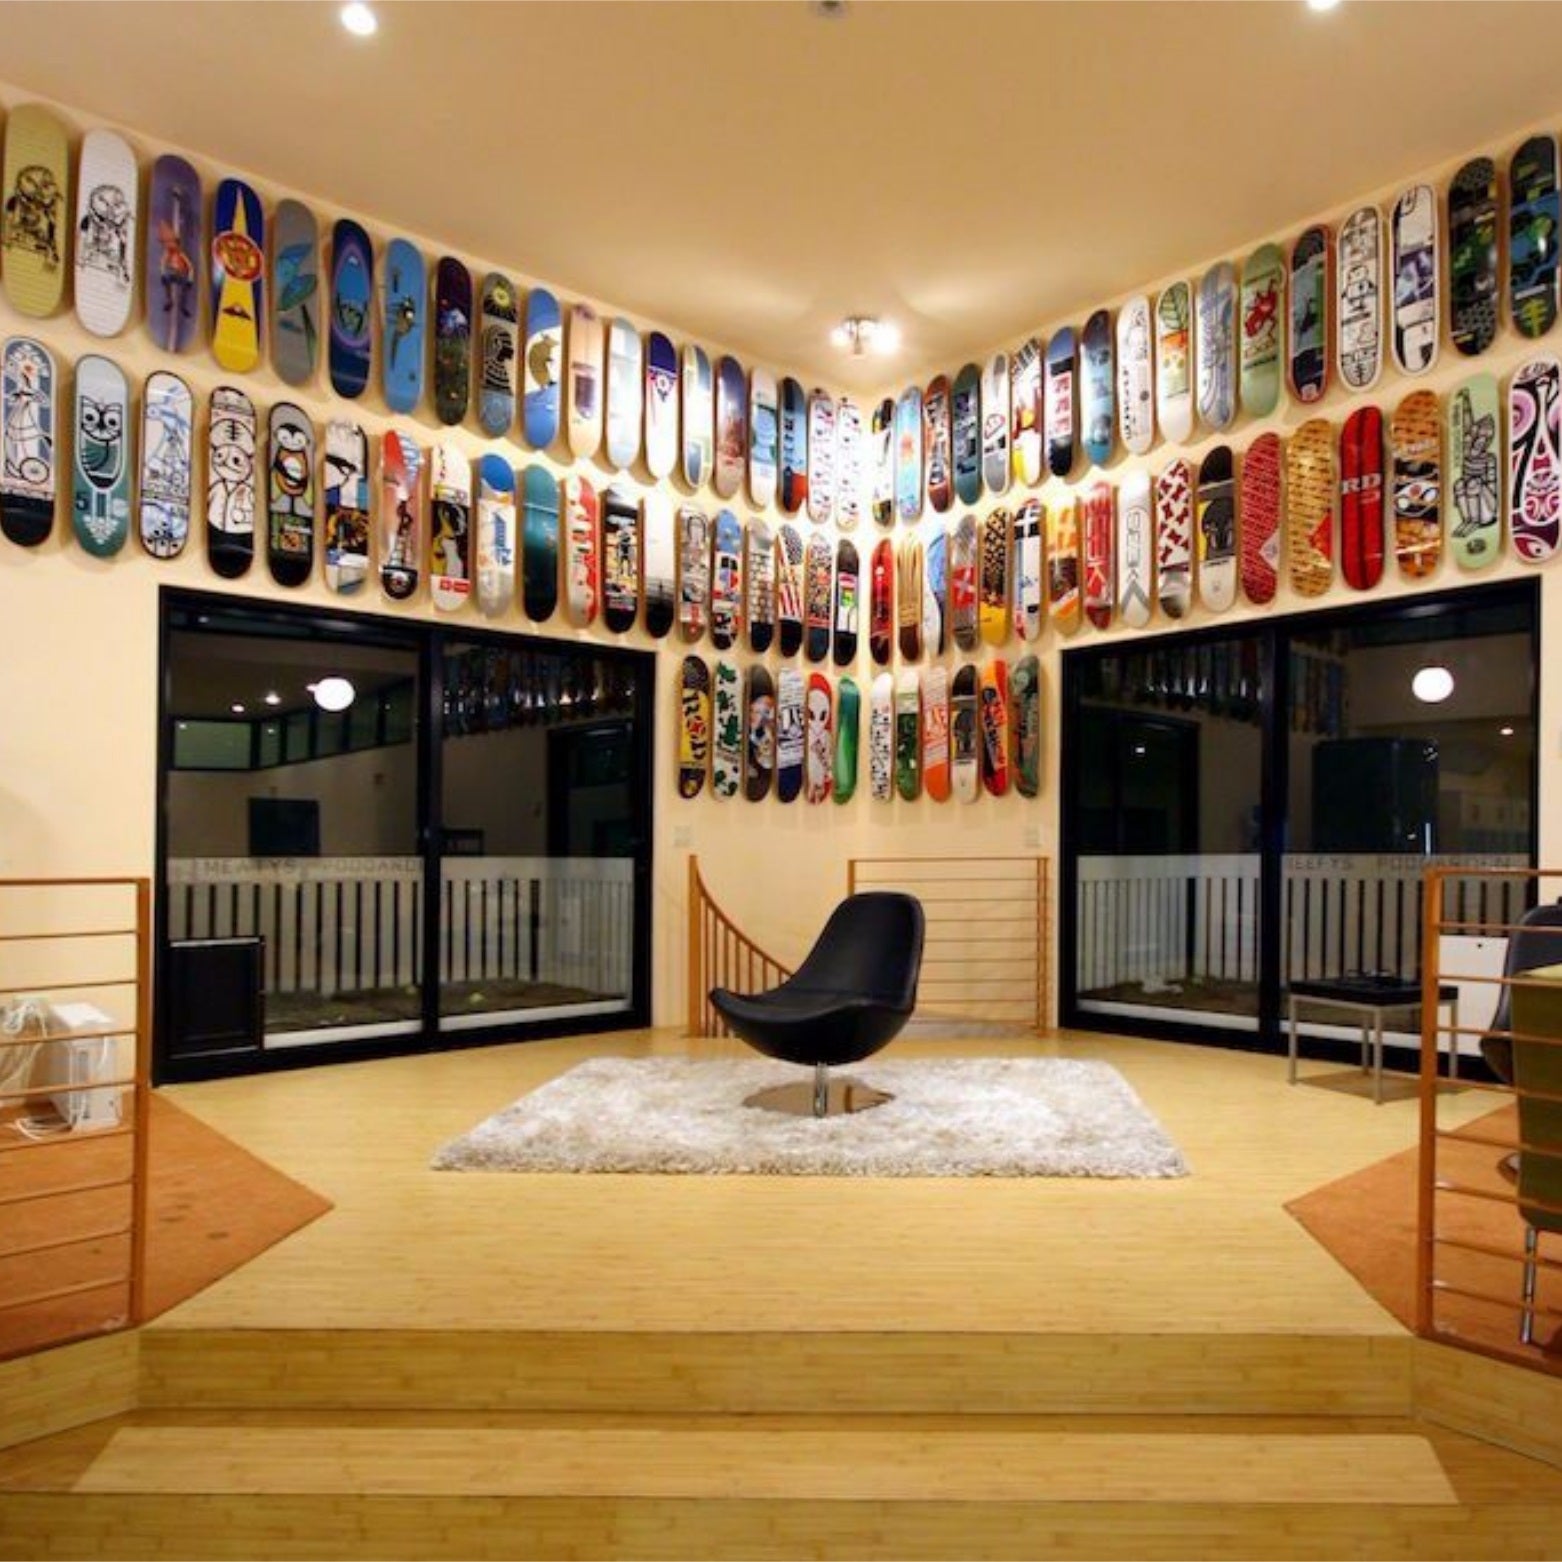 Sk8ology Skateboard Deck Display Wall Mount